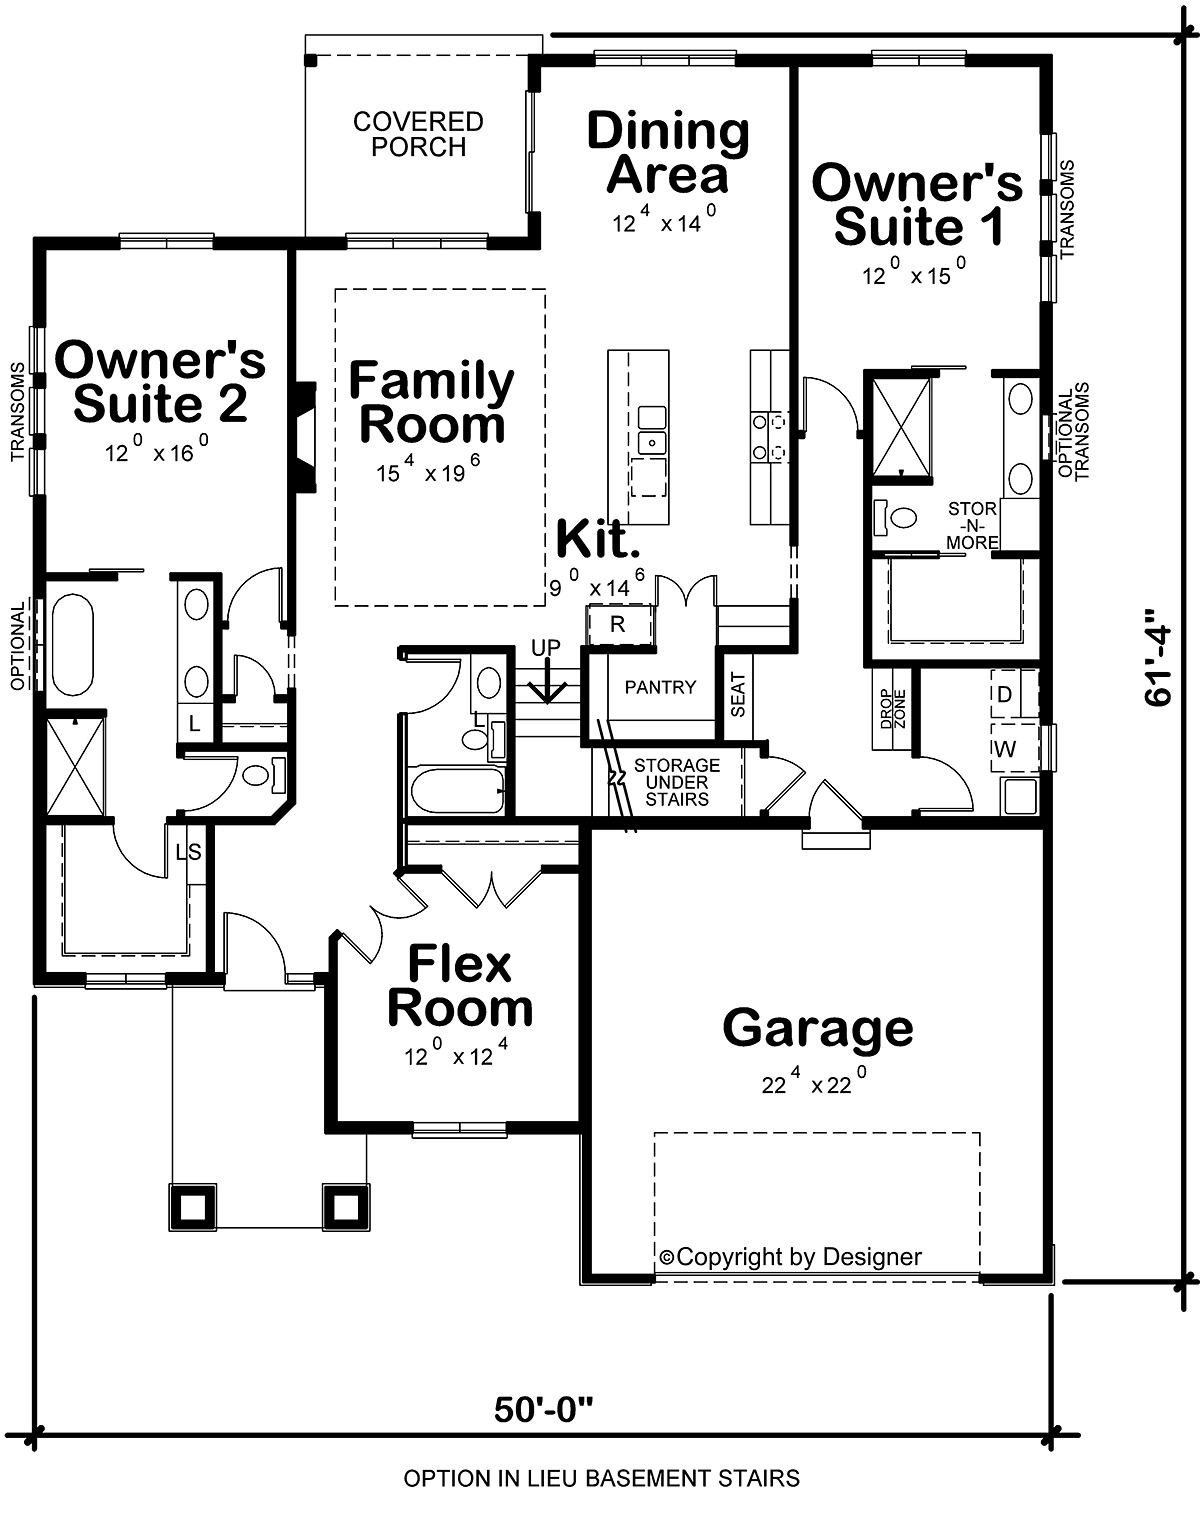 House Plan 81454 Alternate Level One